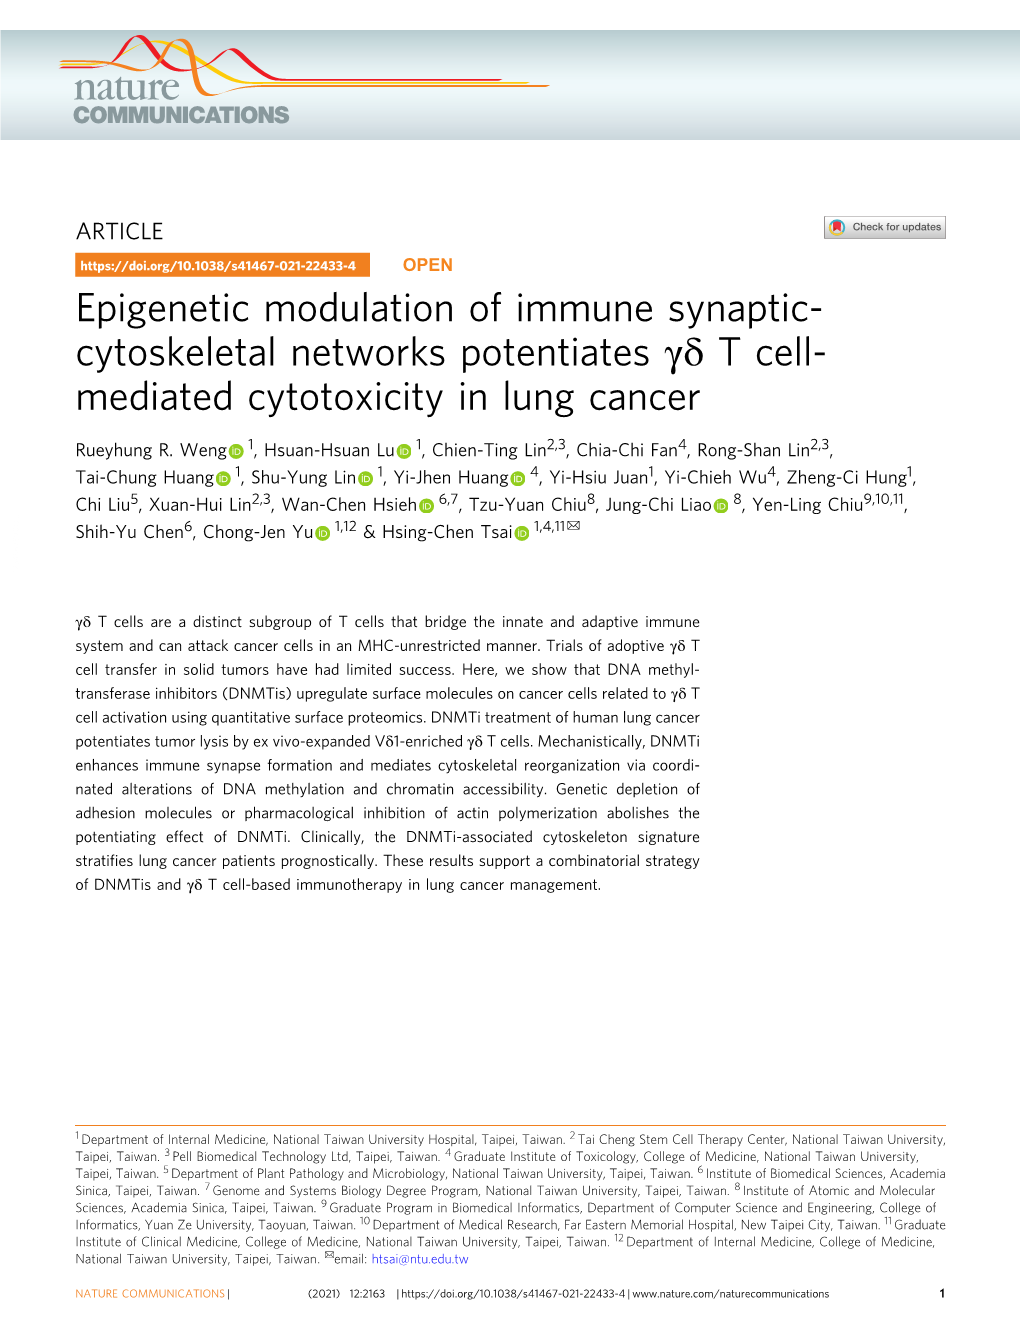 Epigenetic Modulation of Immune Synaptic-Cytoskeletal Networks